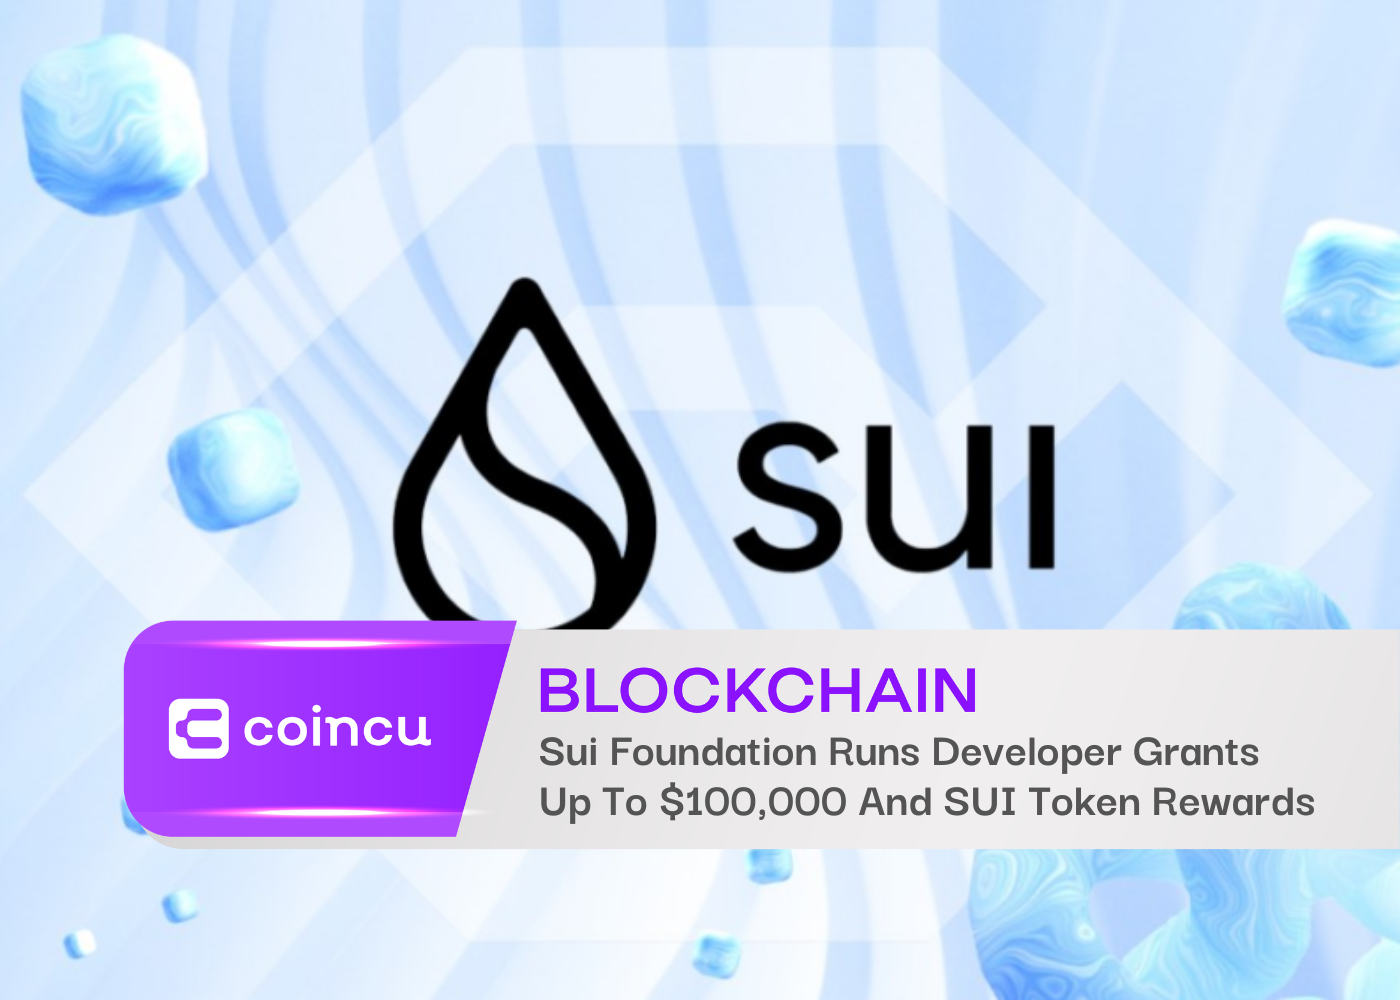 Sui 基金会提供高达 100,000 美元的开发者资助和 SUI 代币奖励